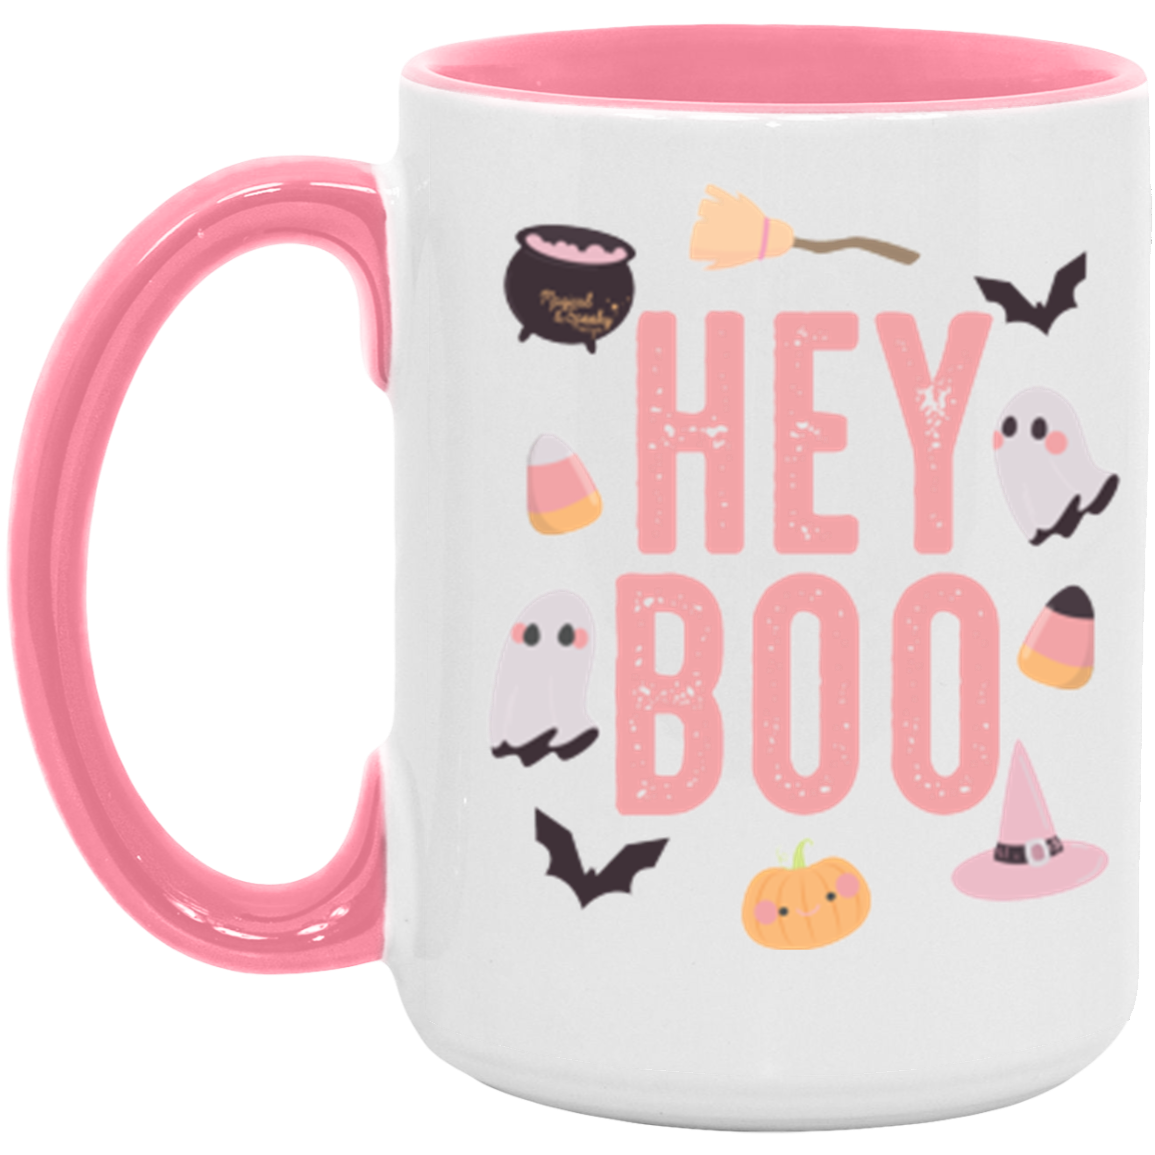 Hey Boo Coffee Mug